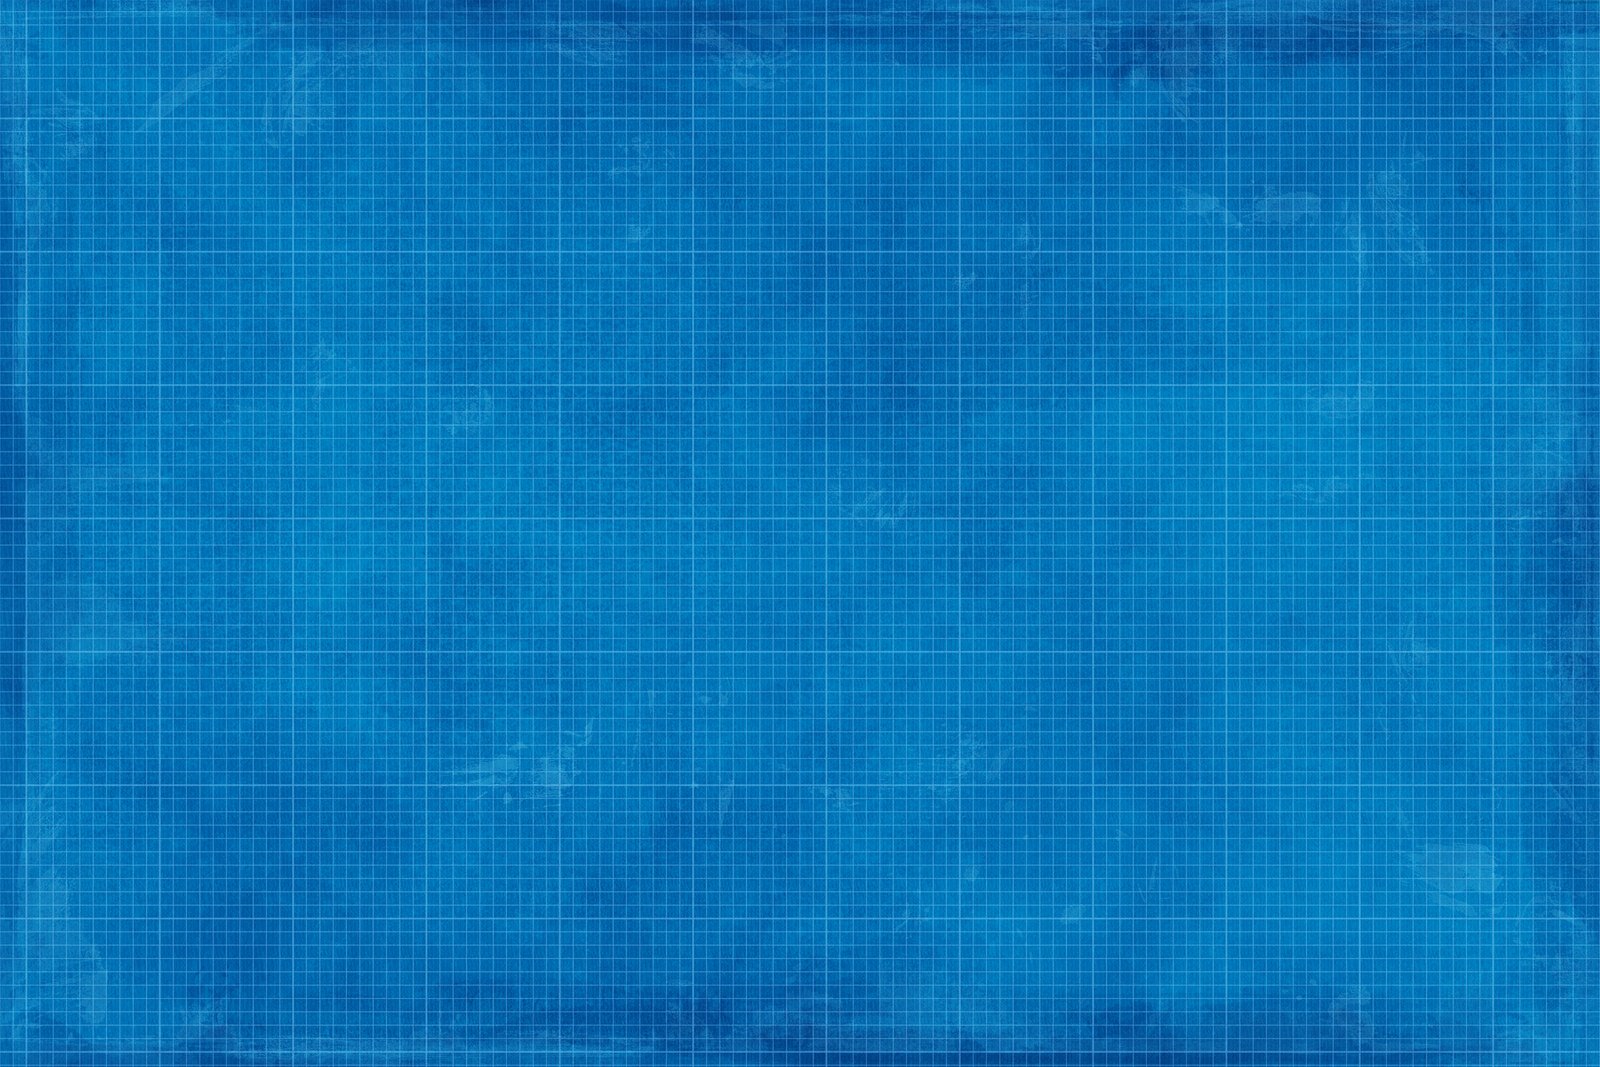 Blueprint grid paper PSDgraphics